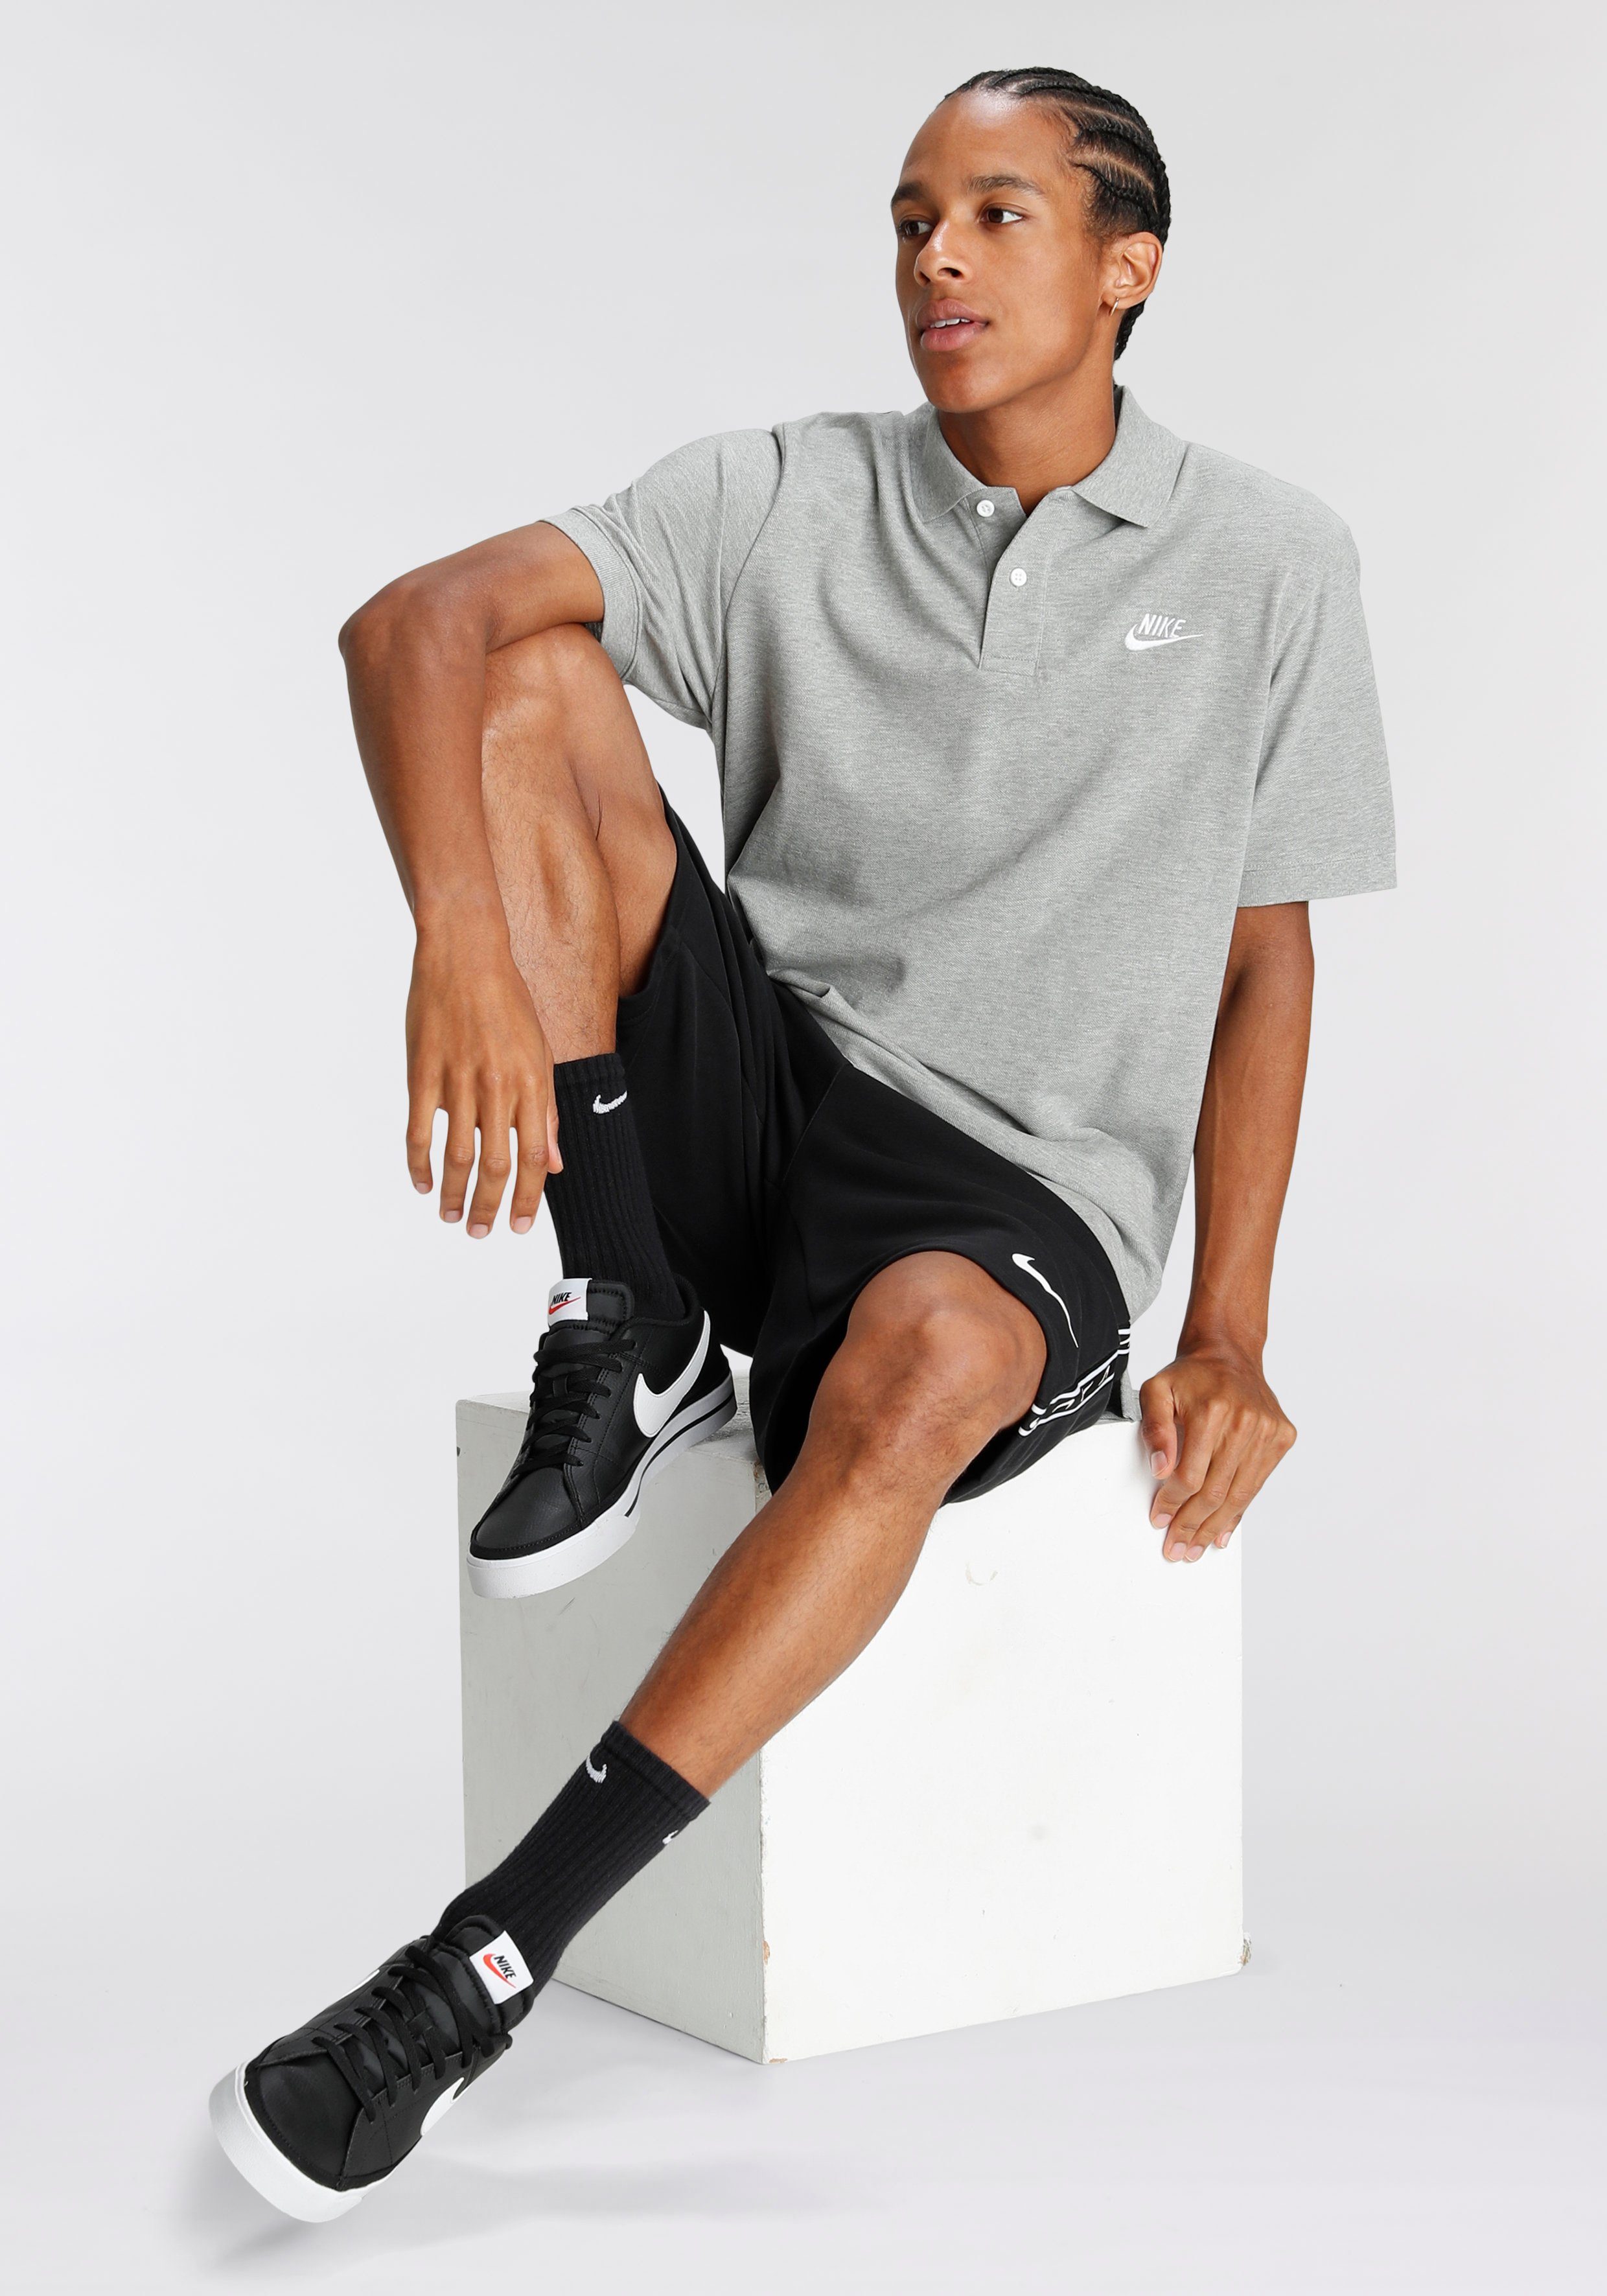 Nike Sportswear Poloshirt Men's Polo DK GREY HEATHER/WHITE